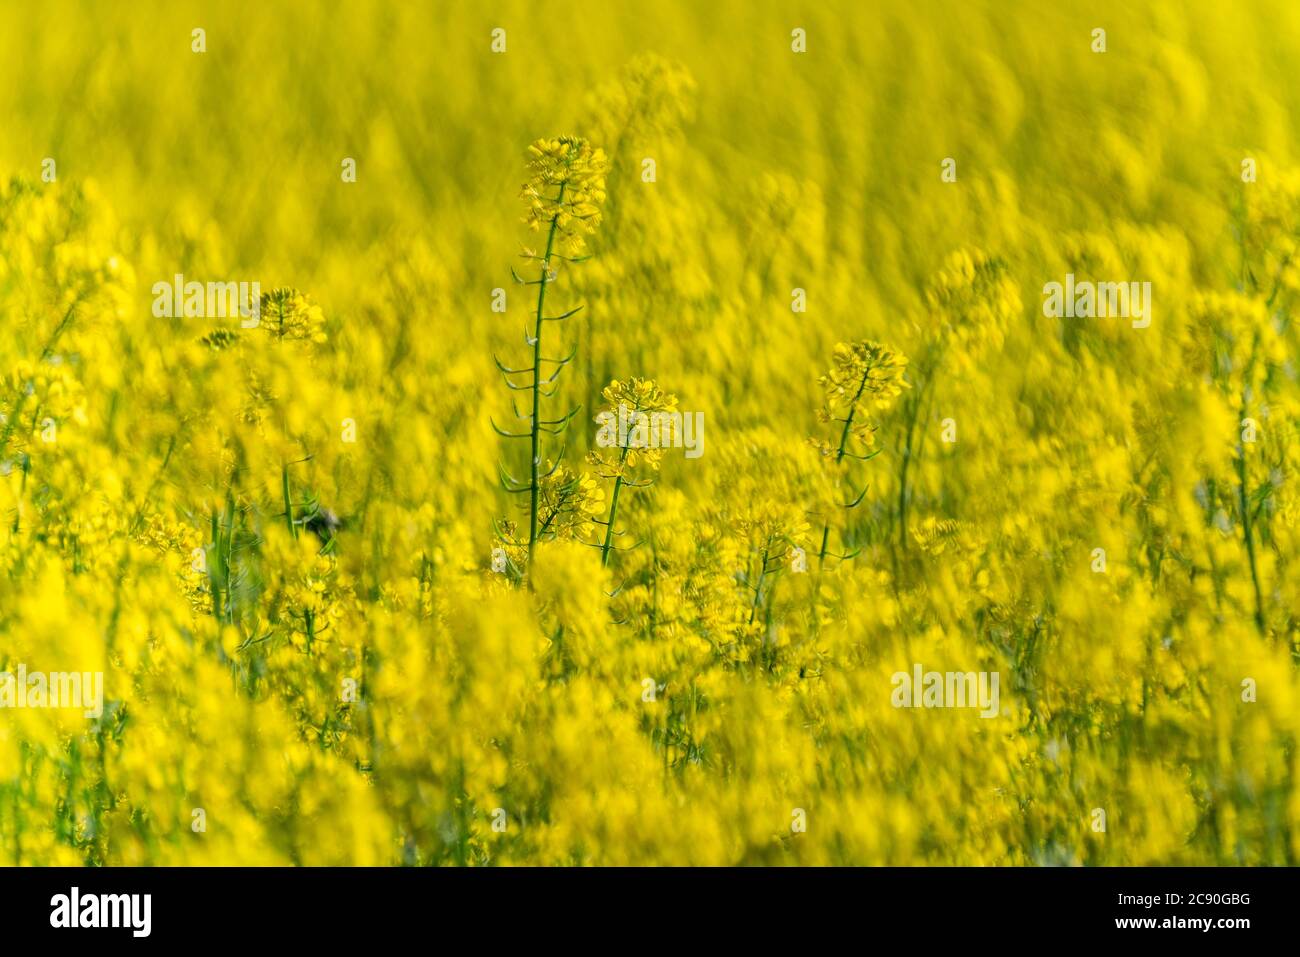 USA, Idaho, Sun Valley, Close-up of mustard crop Stock Photo